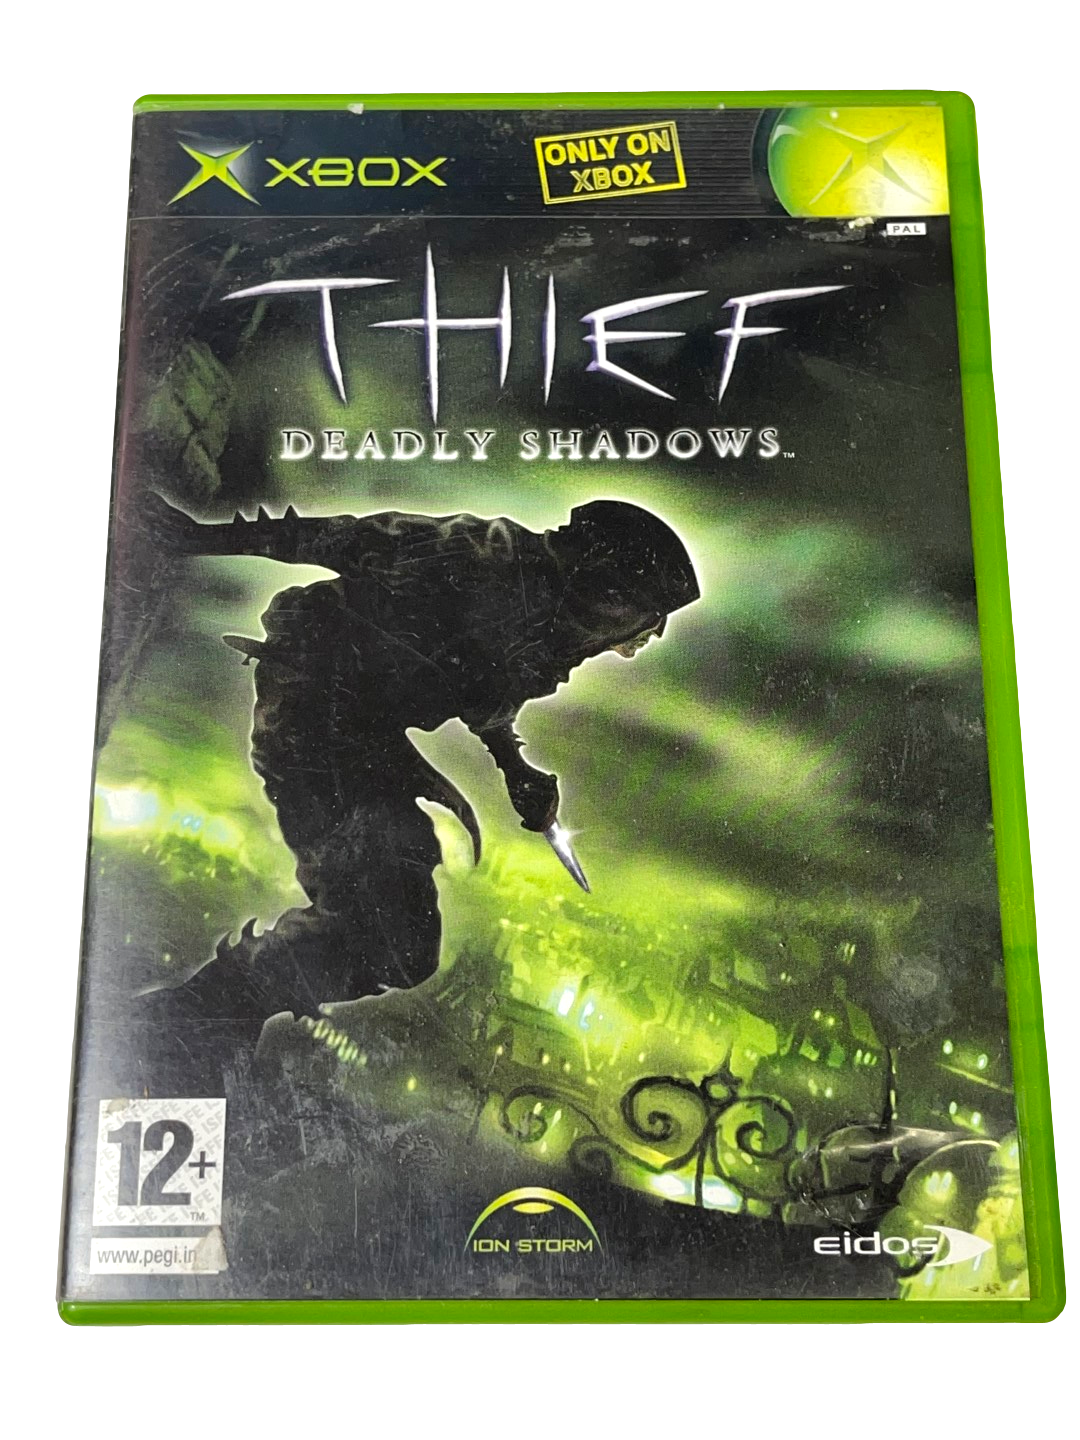 Shadow of Memories Xbox PAL